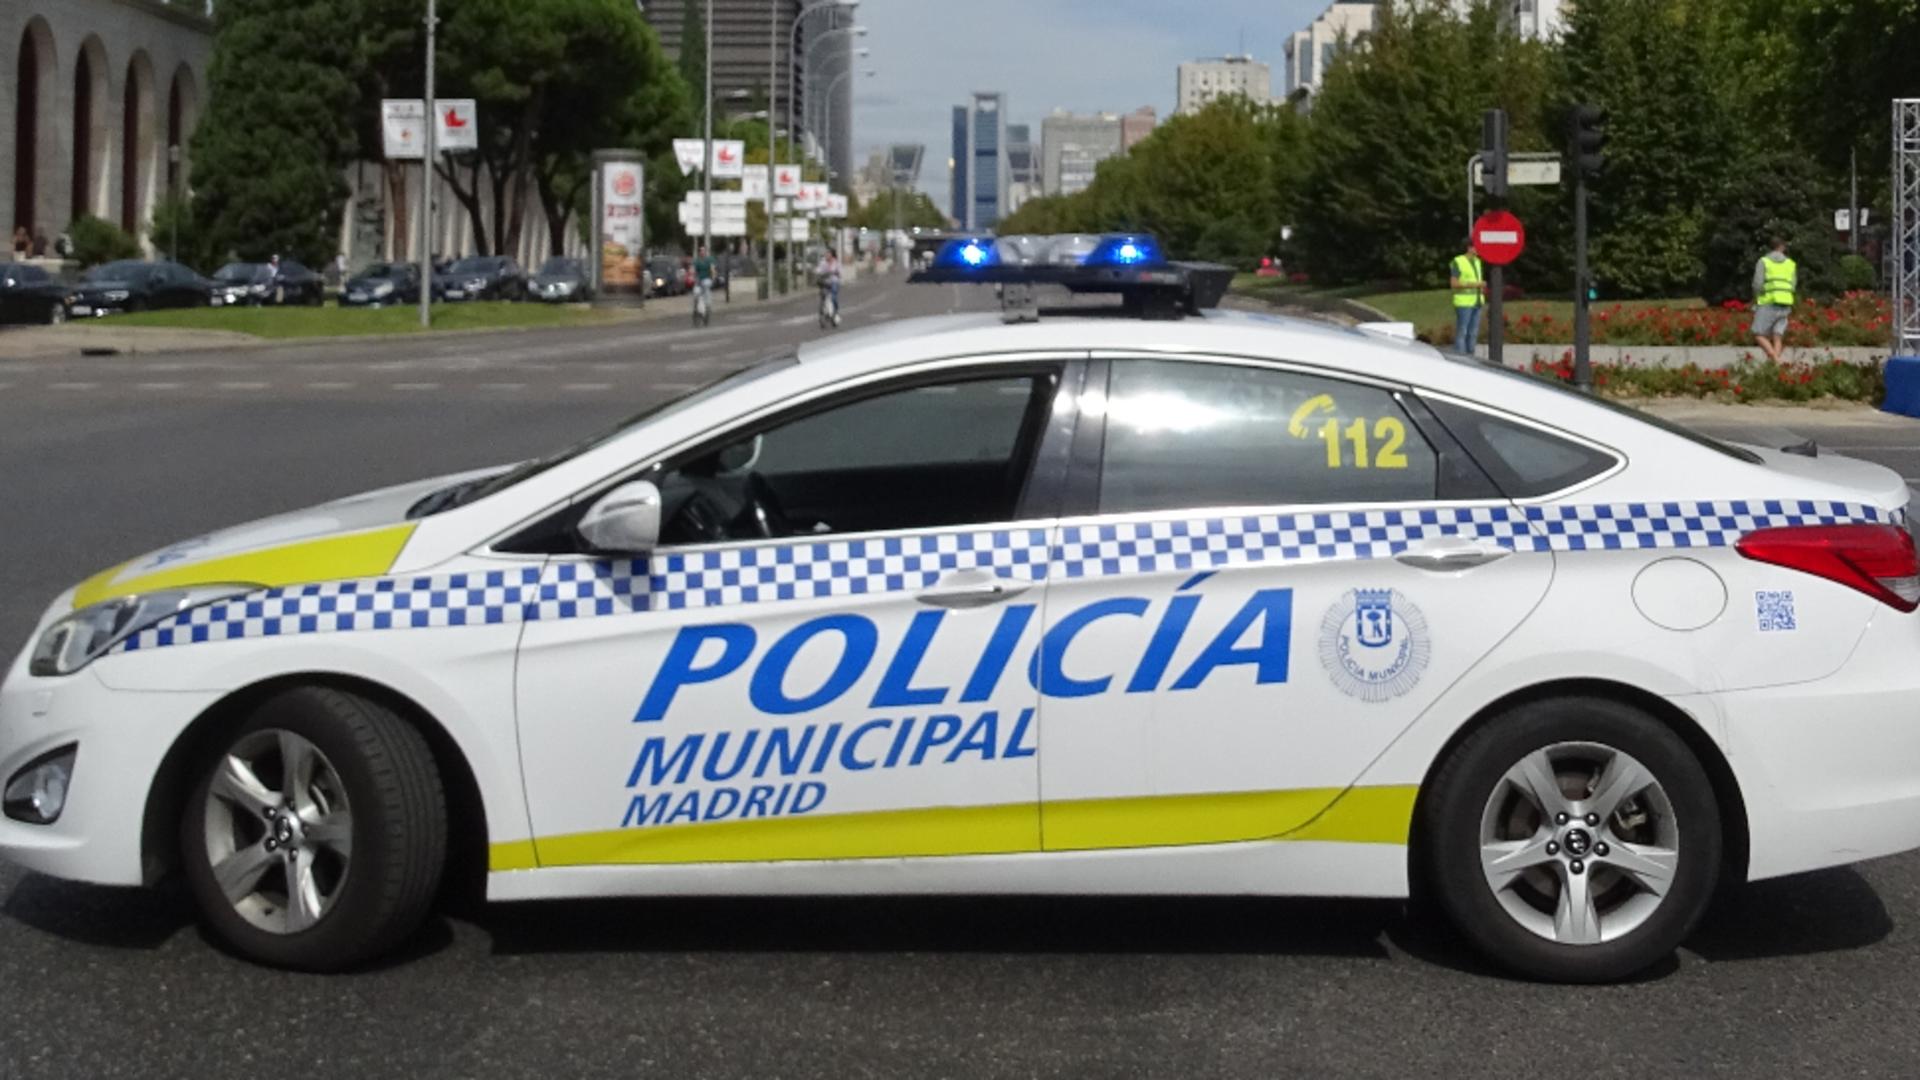 Politia Madrid FOTO:Shutterstock